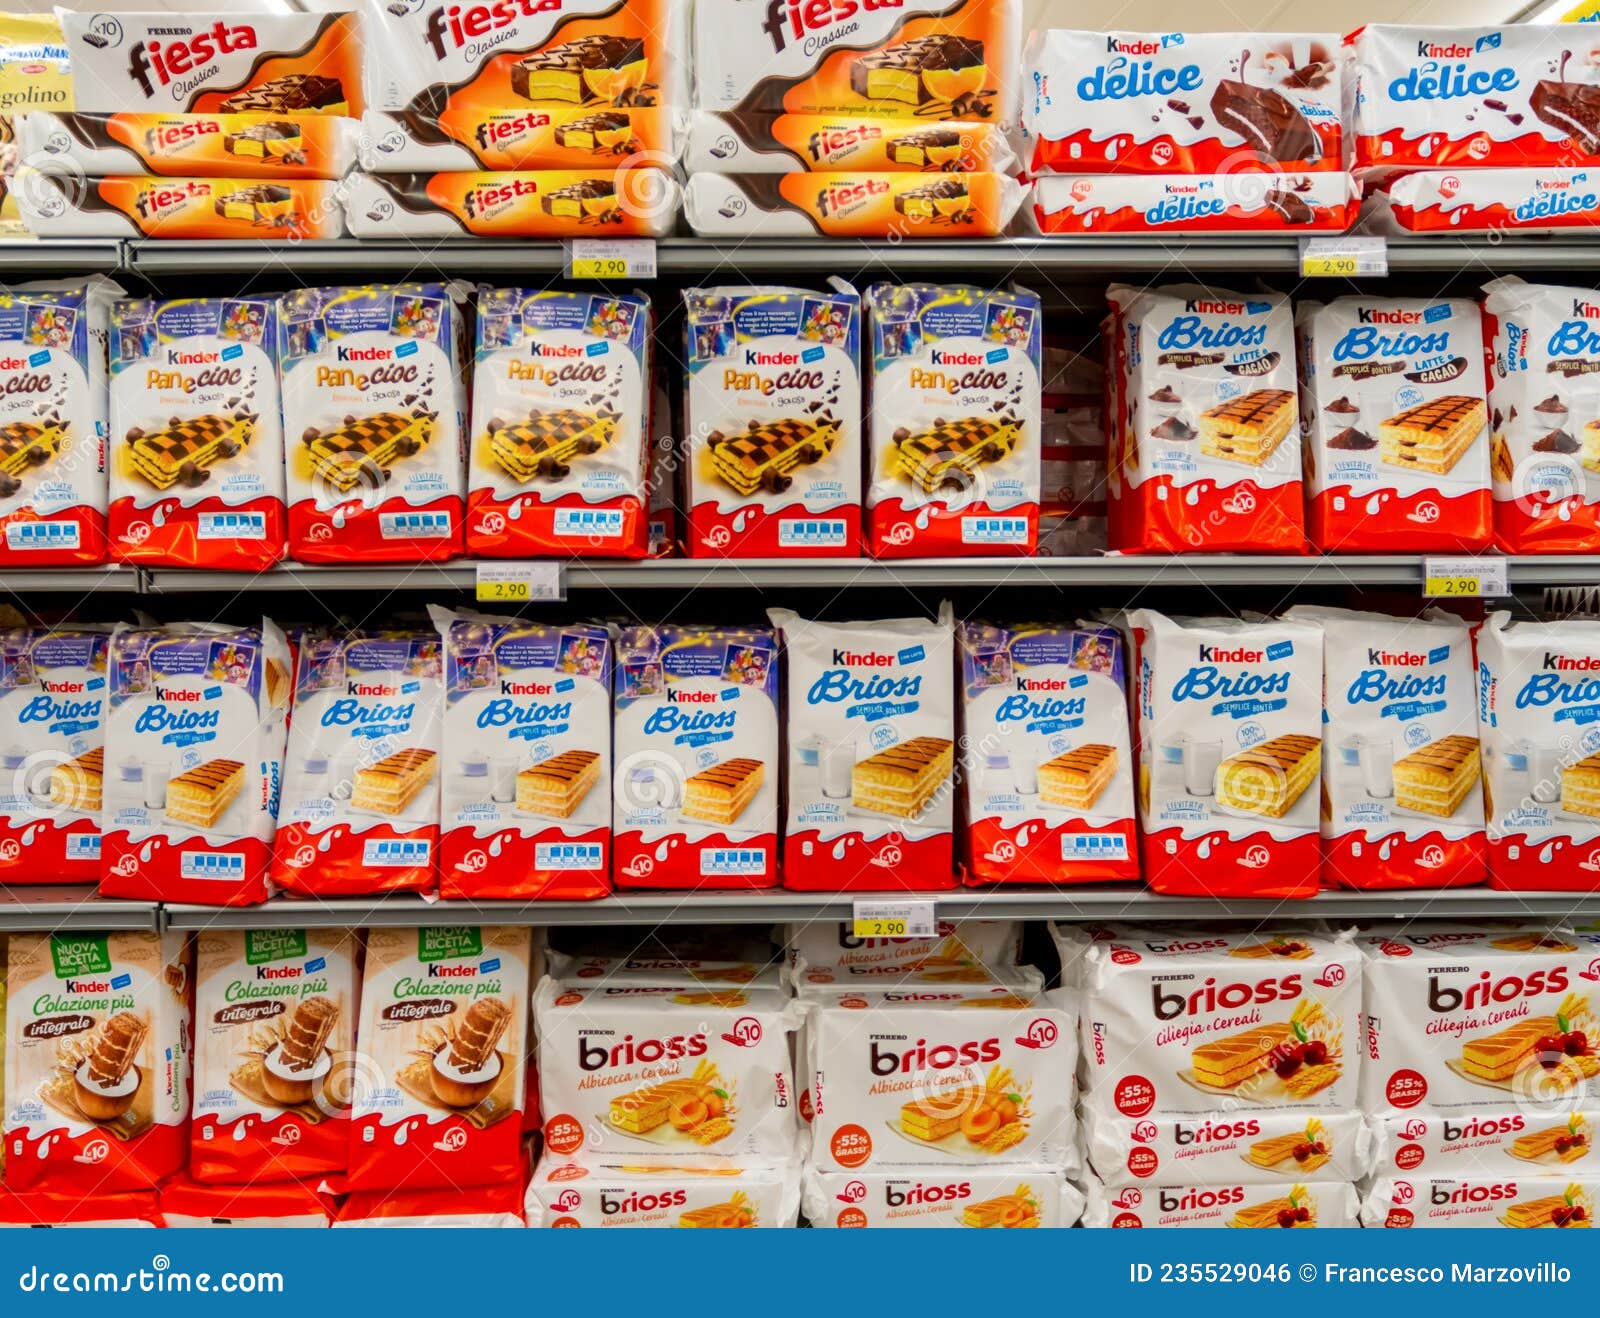 Ferrero Kinder Products Displayed Editorial Photo - Image of ingredient,  international: 235529046